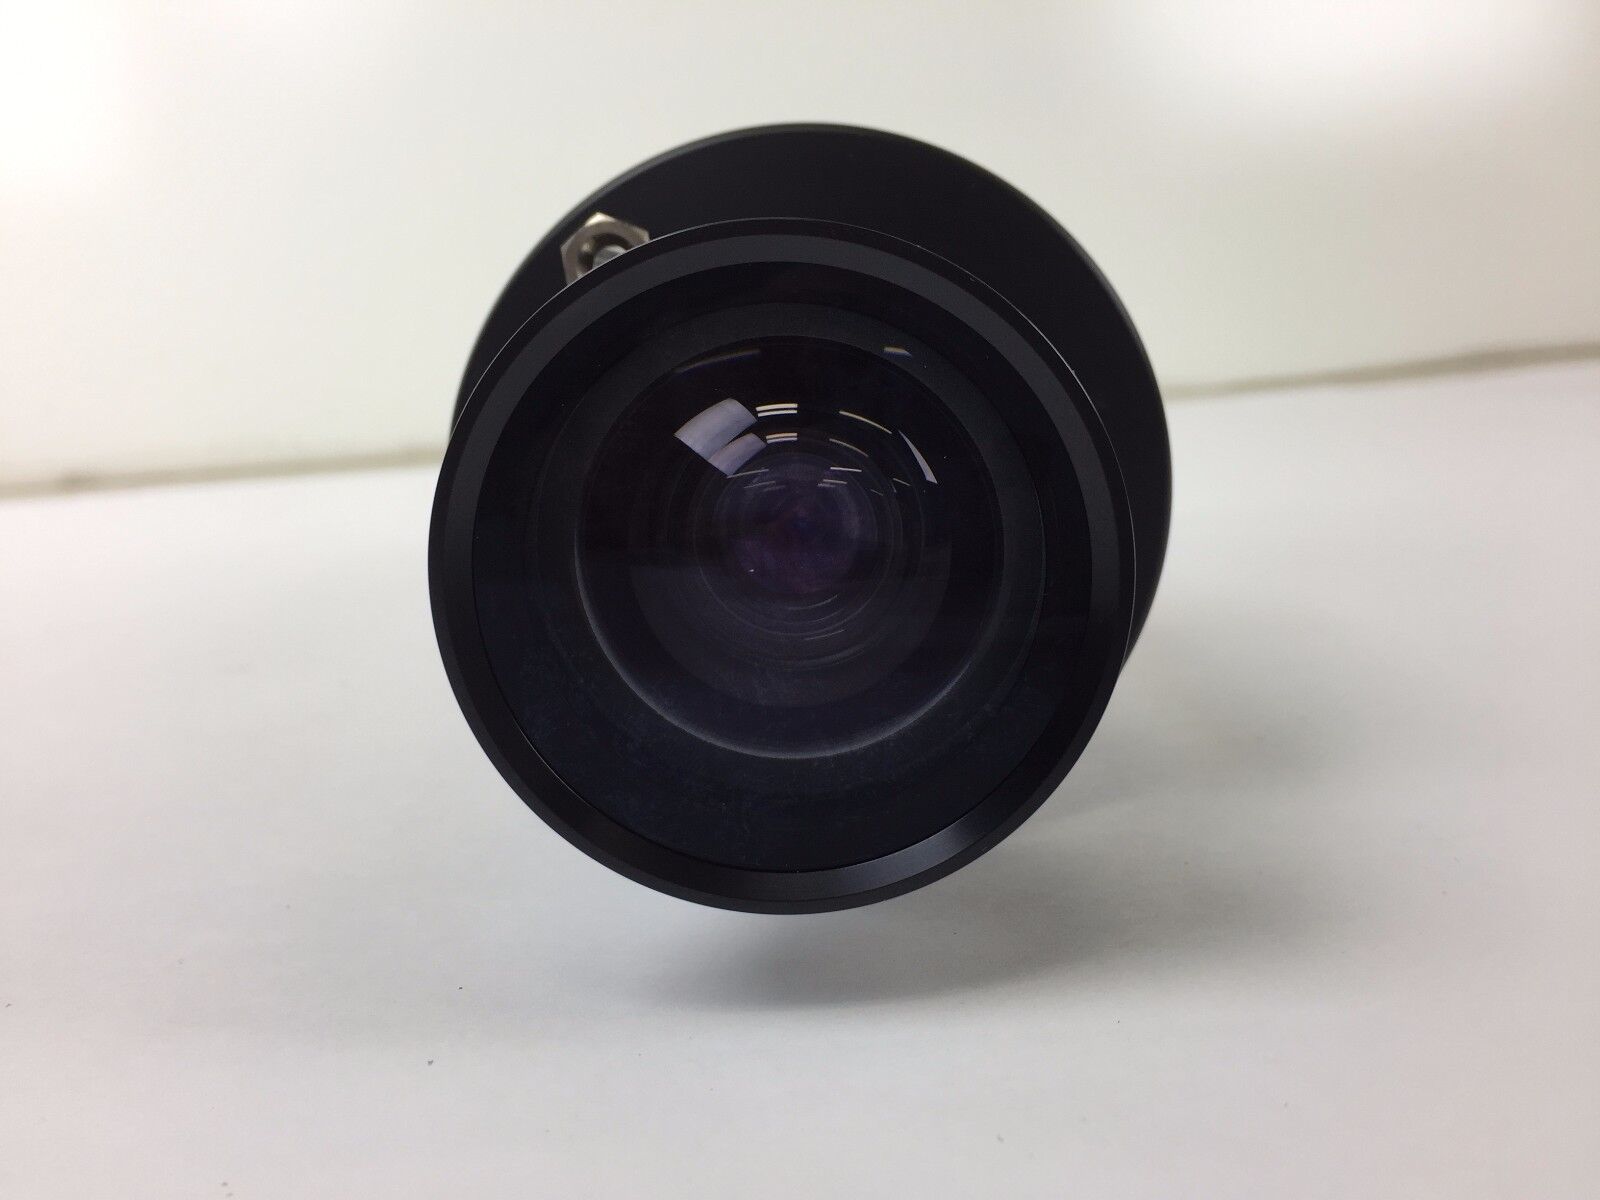 Hitachi VK-S214R Surveillance Camera with WTI-WL6 Lens and 110V AC Power Board